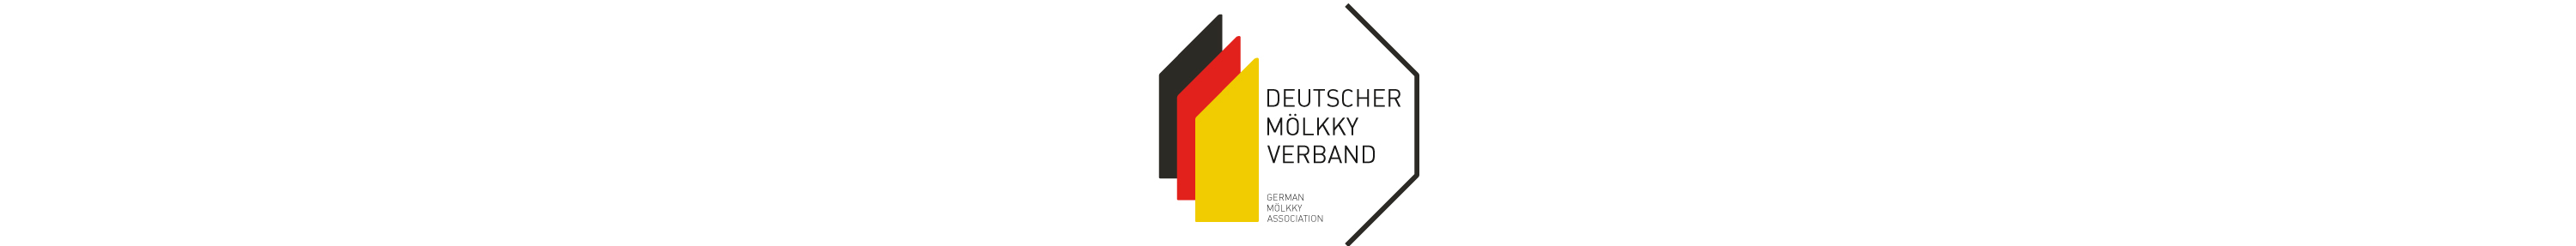 German Federation of Mölkky - Deutscher Mölkky Verband